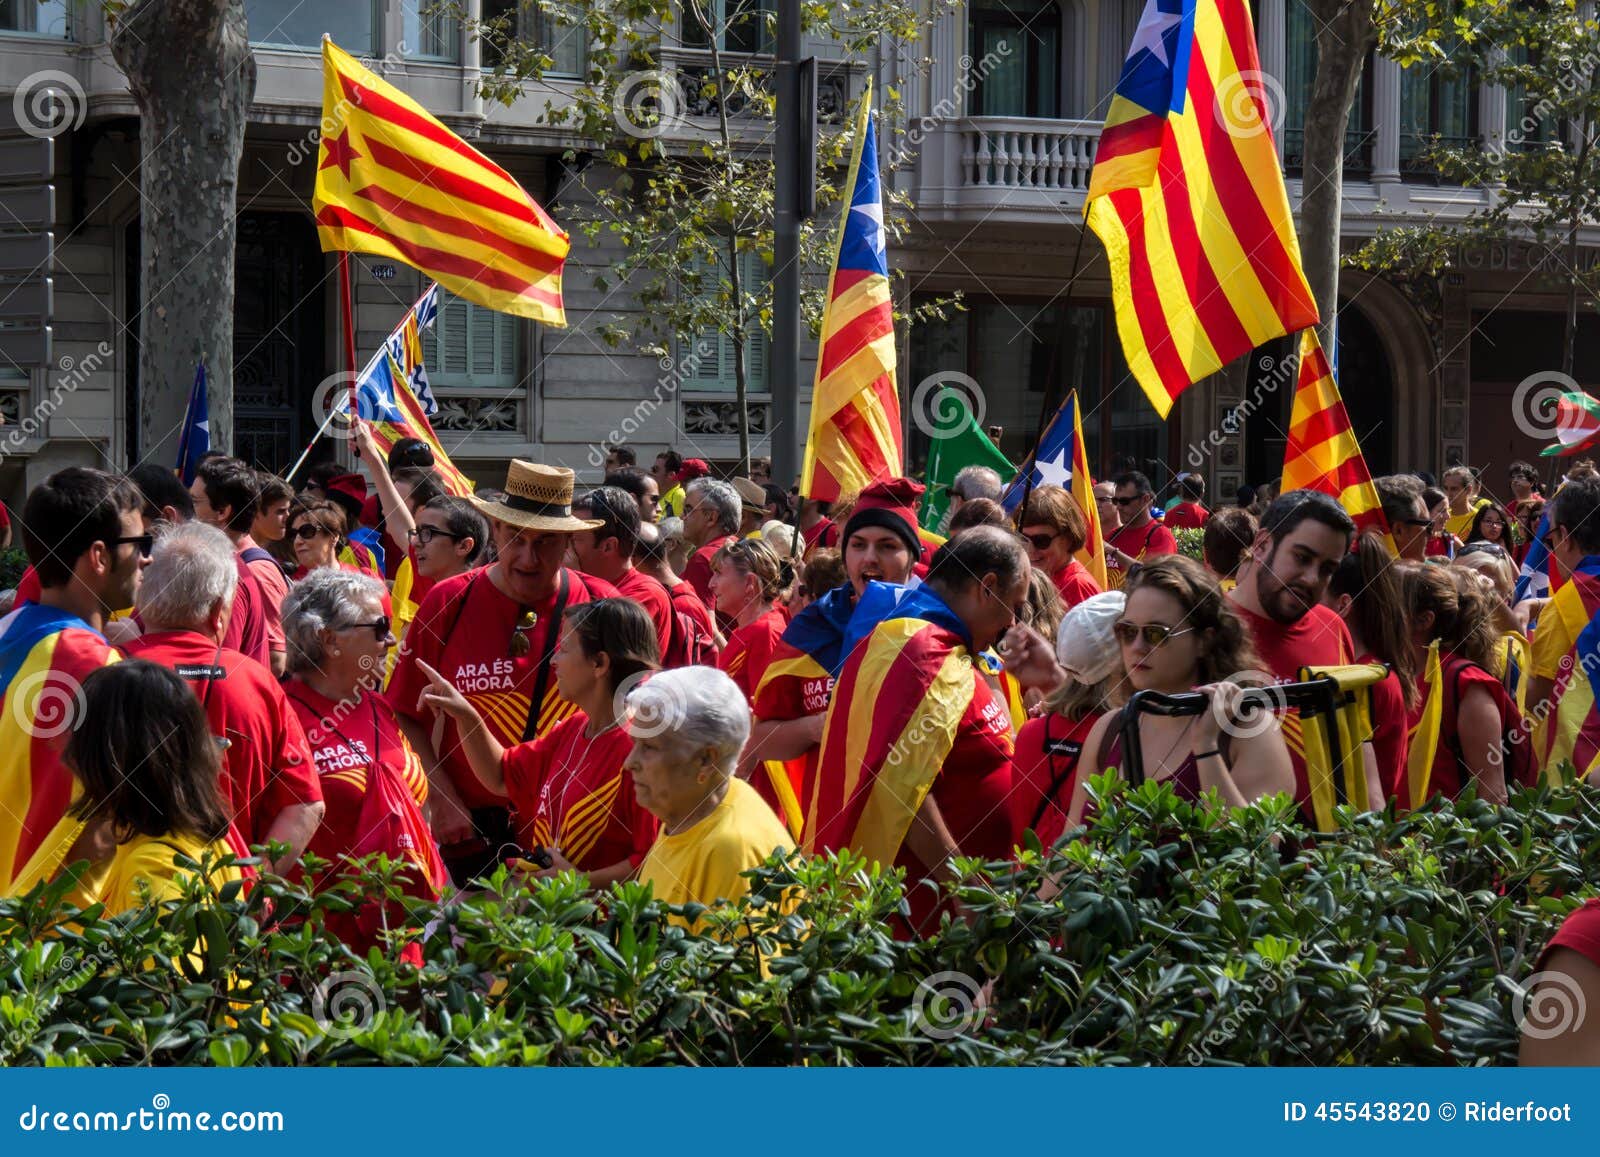 Barcelona Form Fridoom of Catalonia Editorial Image - Image of estelada, city: